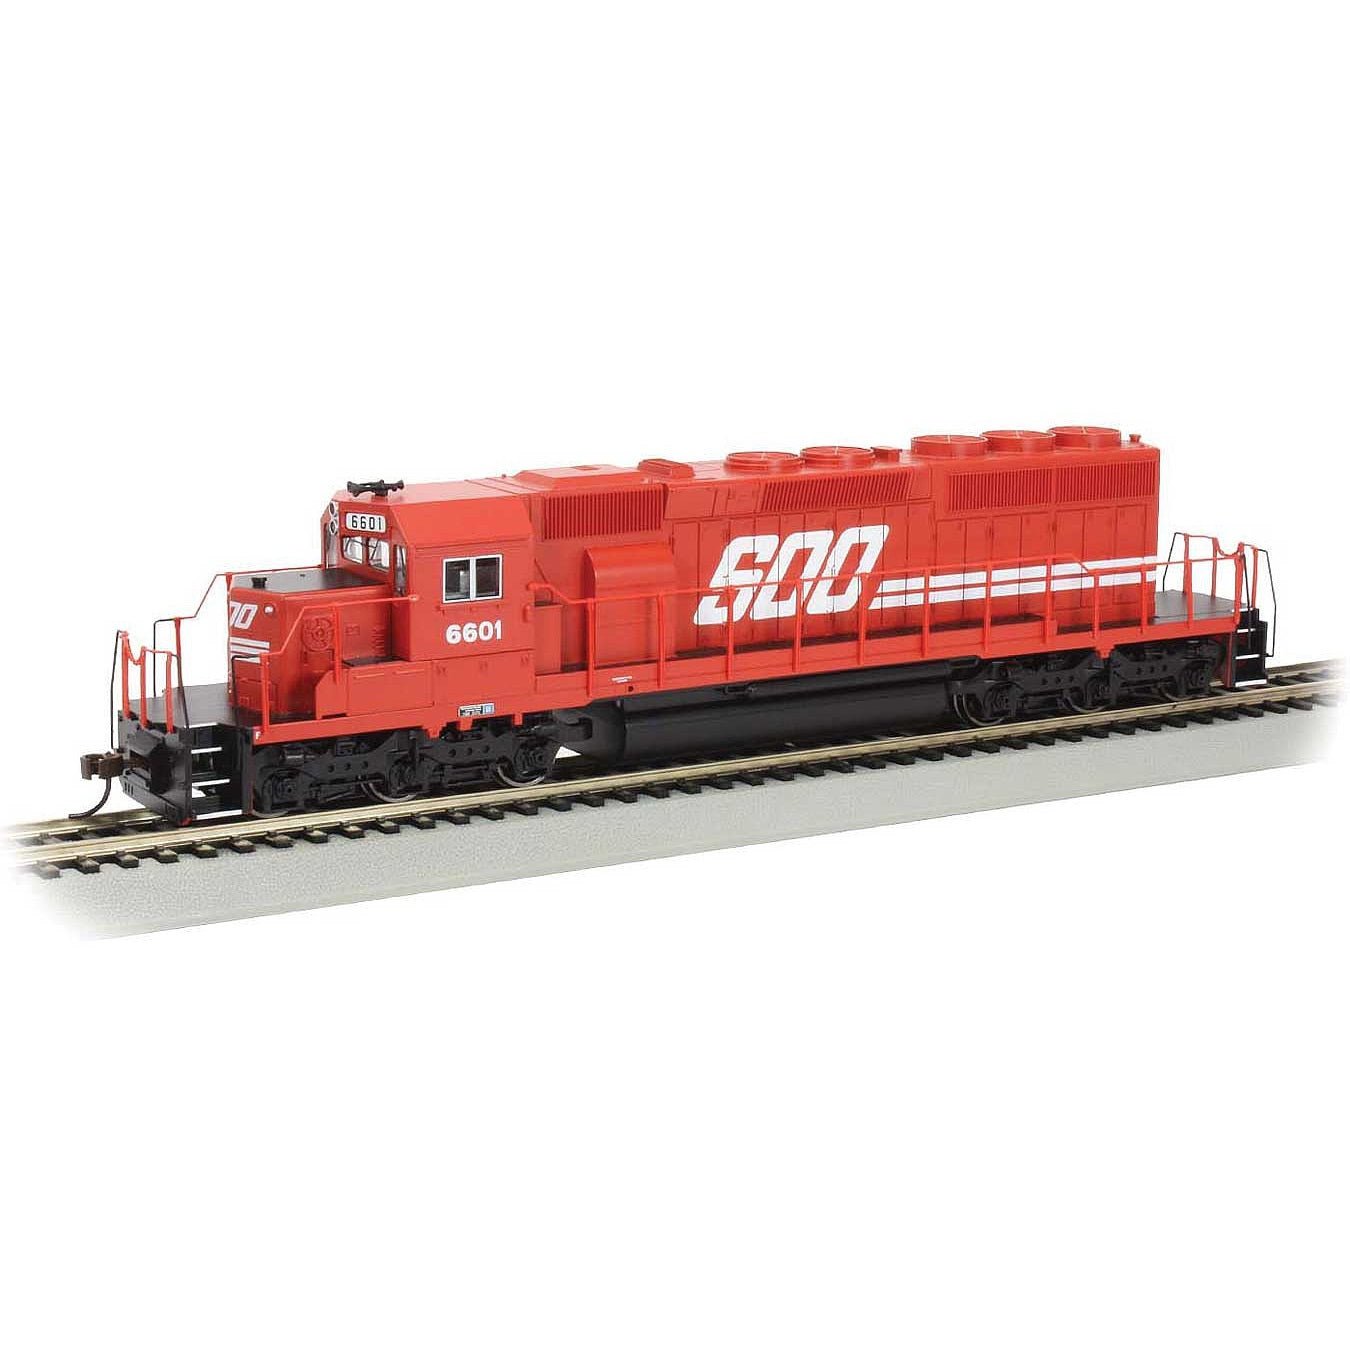 Bachmann EMD SD40 - 2 Diesel Locomotive - SOO Line #6601, HO Scale